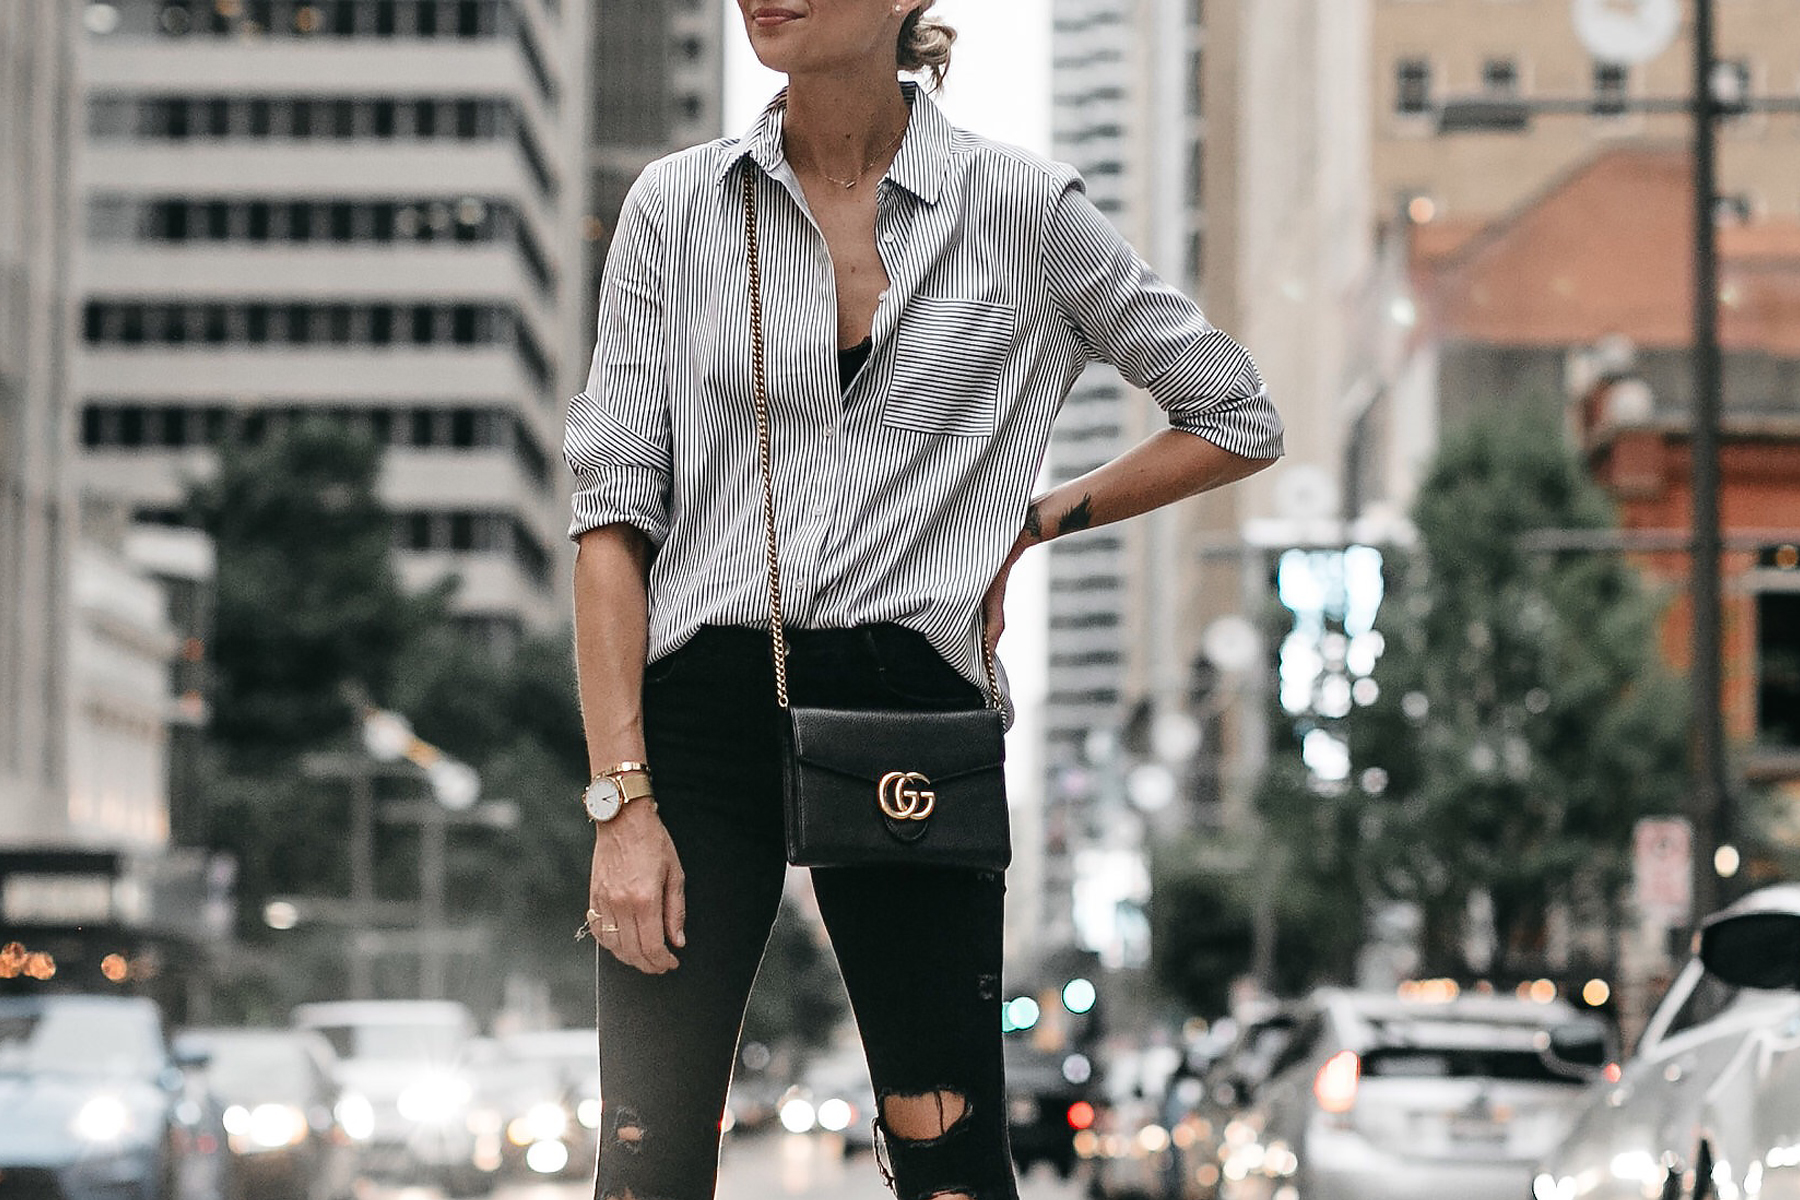 Black White Striped Button Down Shirt Gucci Handbag Fashion Jackson Dallas Blogger Fashion Blogger Street Style